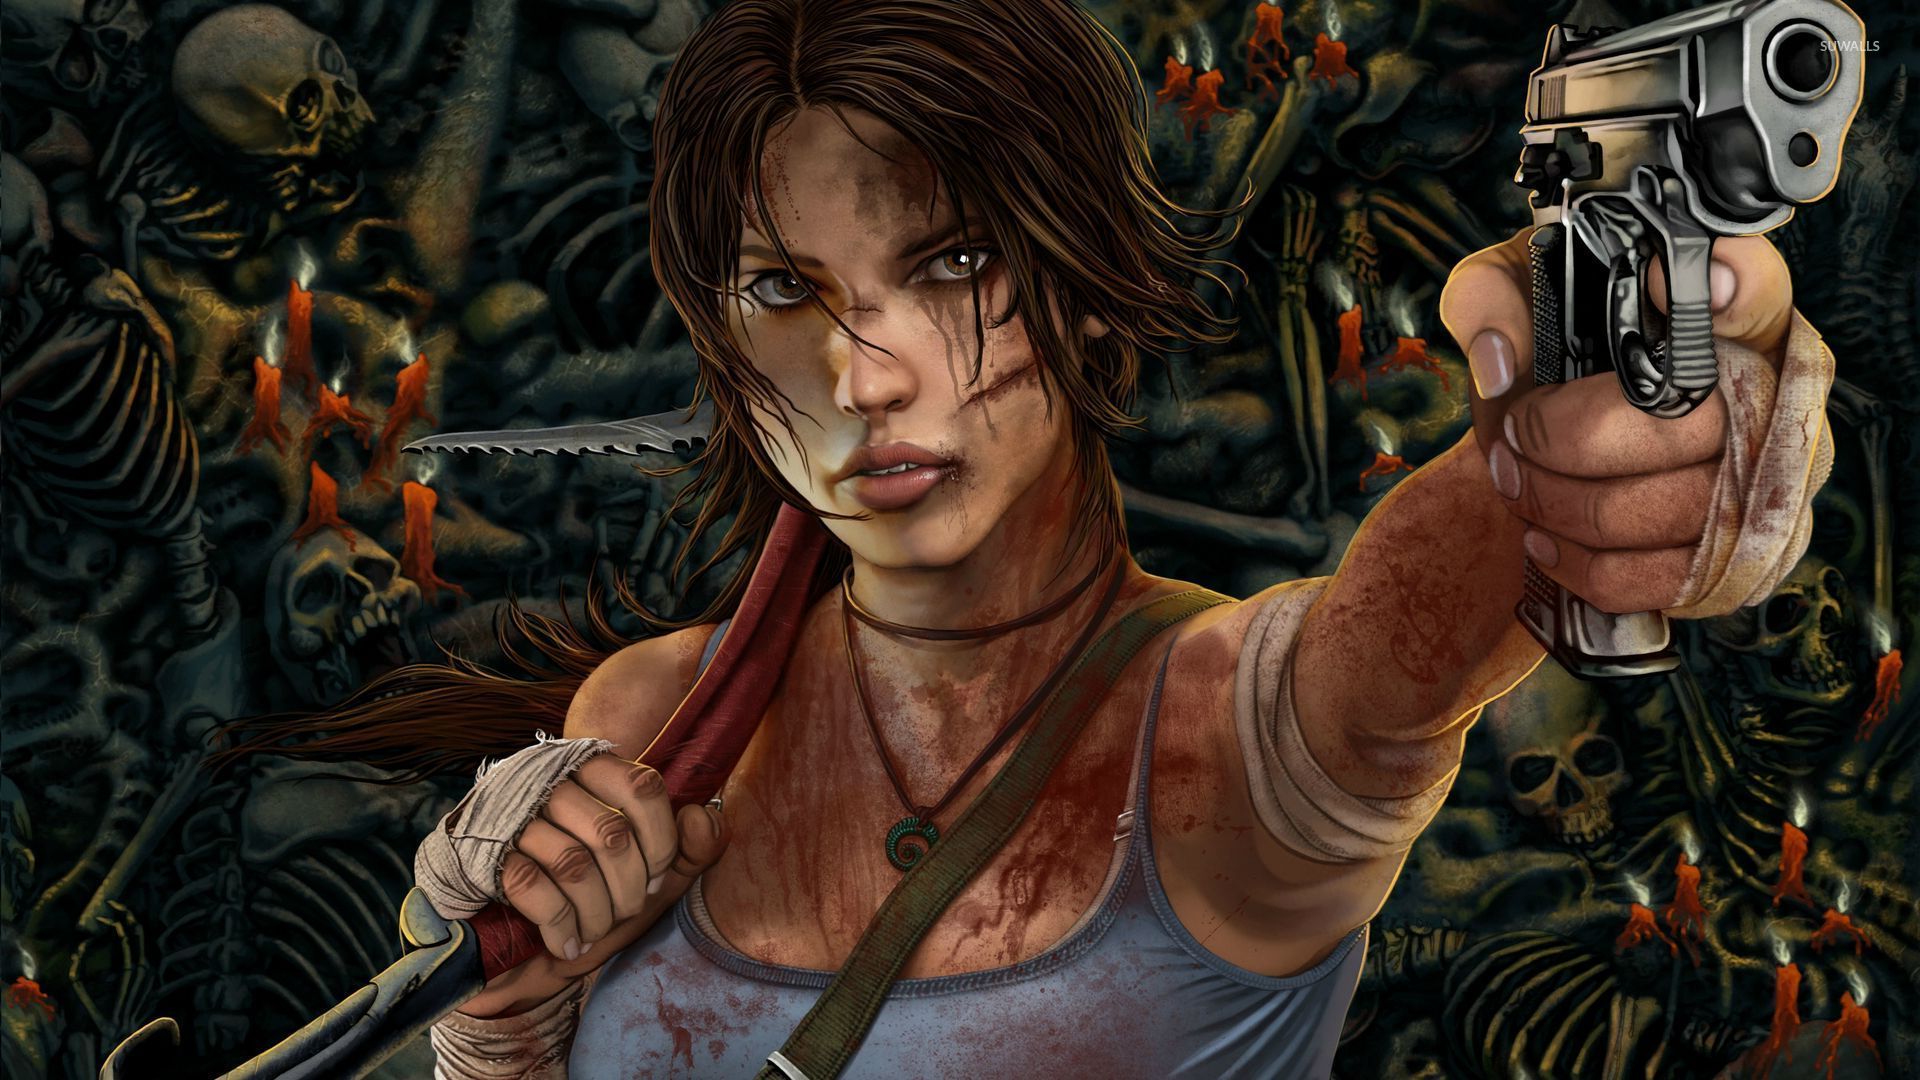 Lara Croft - Tomb Raider [12] wallpaper - Game wallpapers - #27285